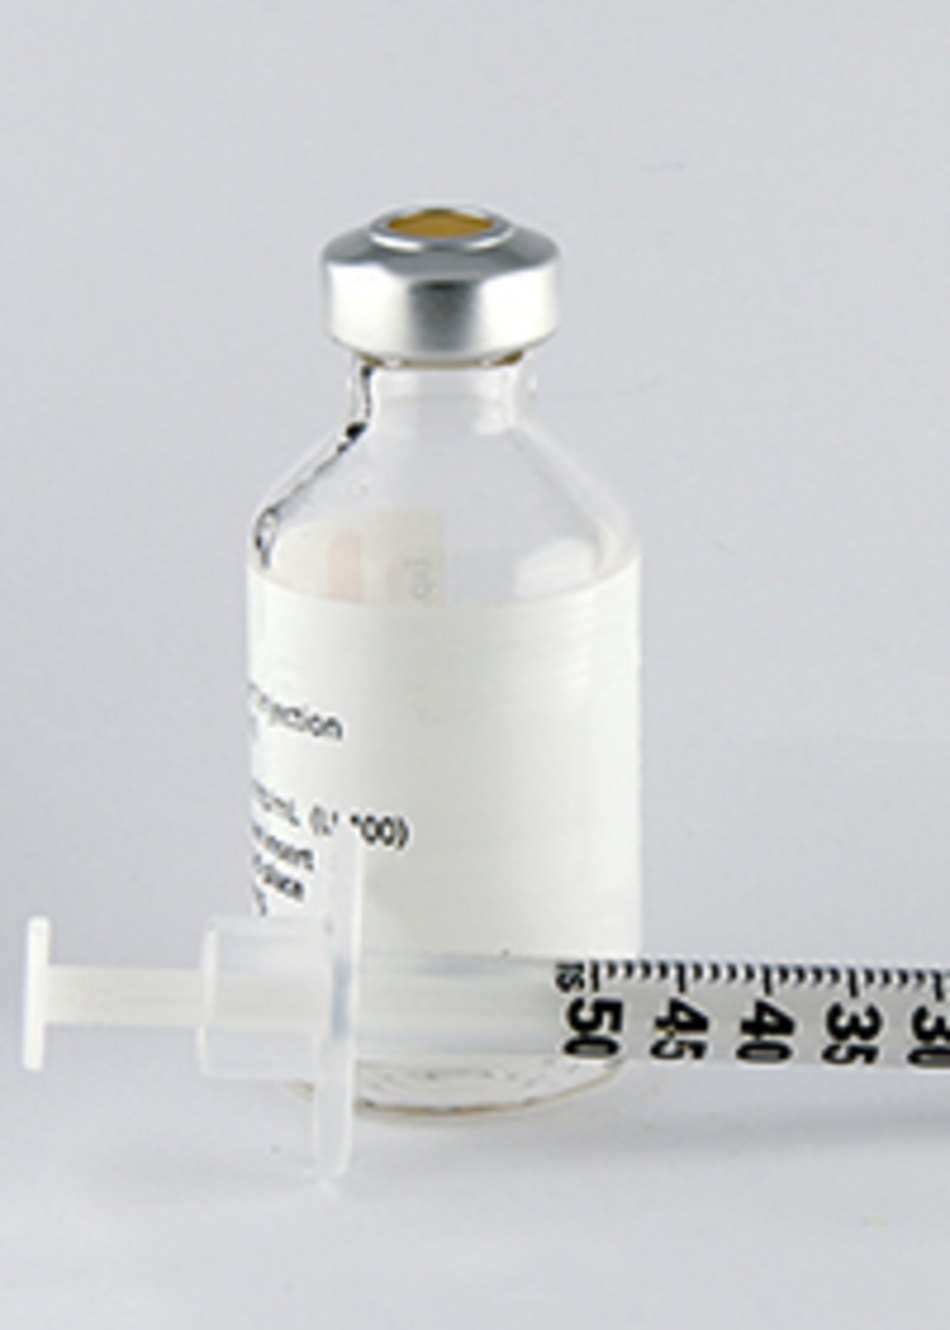 Scientists Develop "Smart" Insulin that Automatically Adjusts Blood Sugar